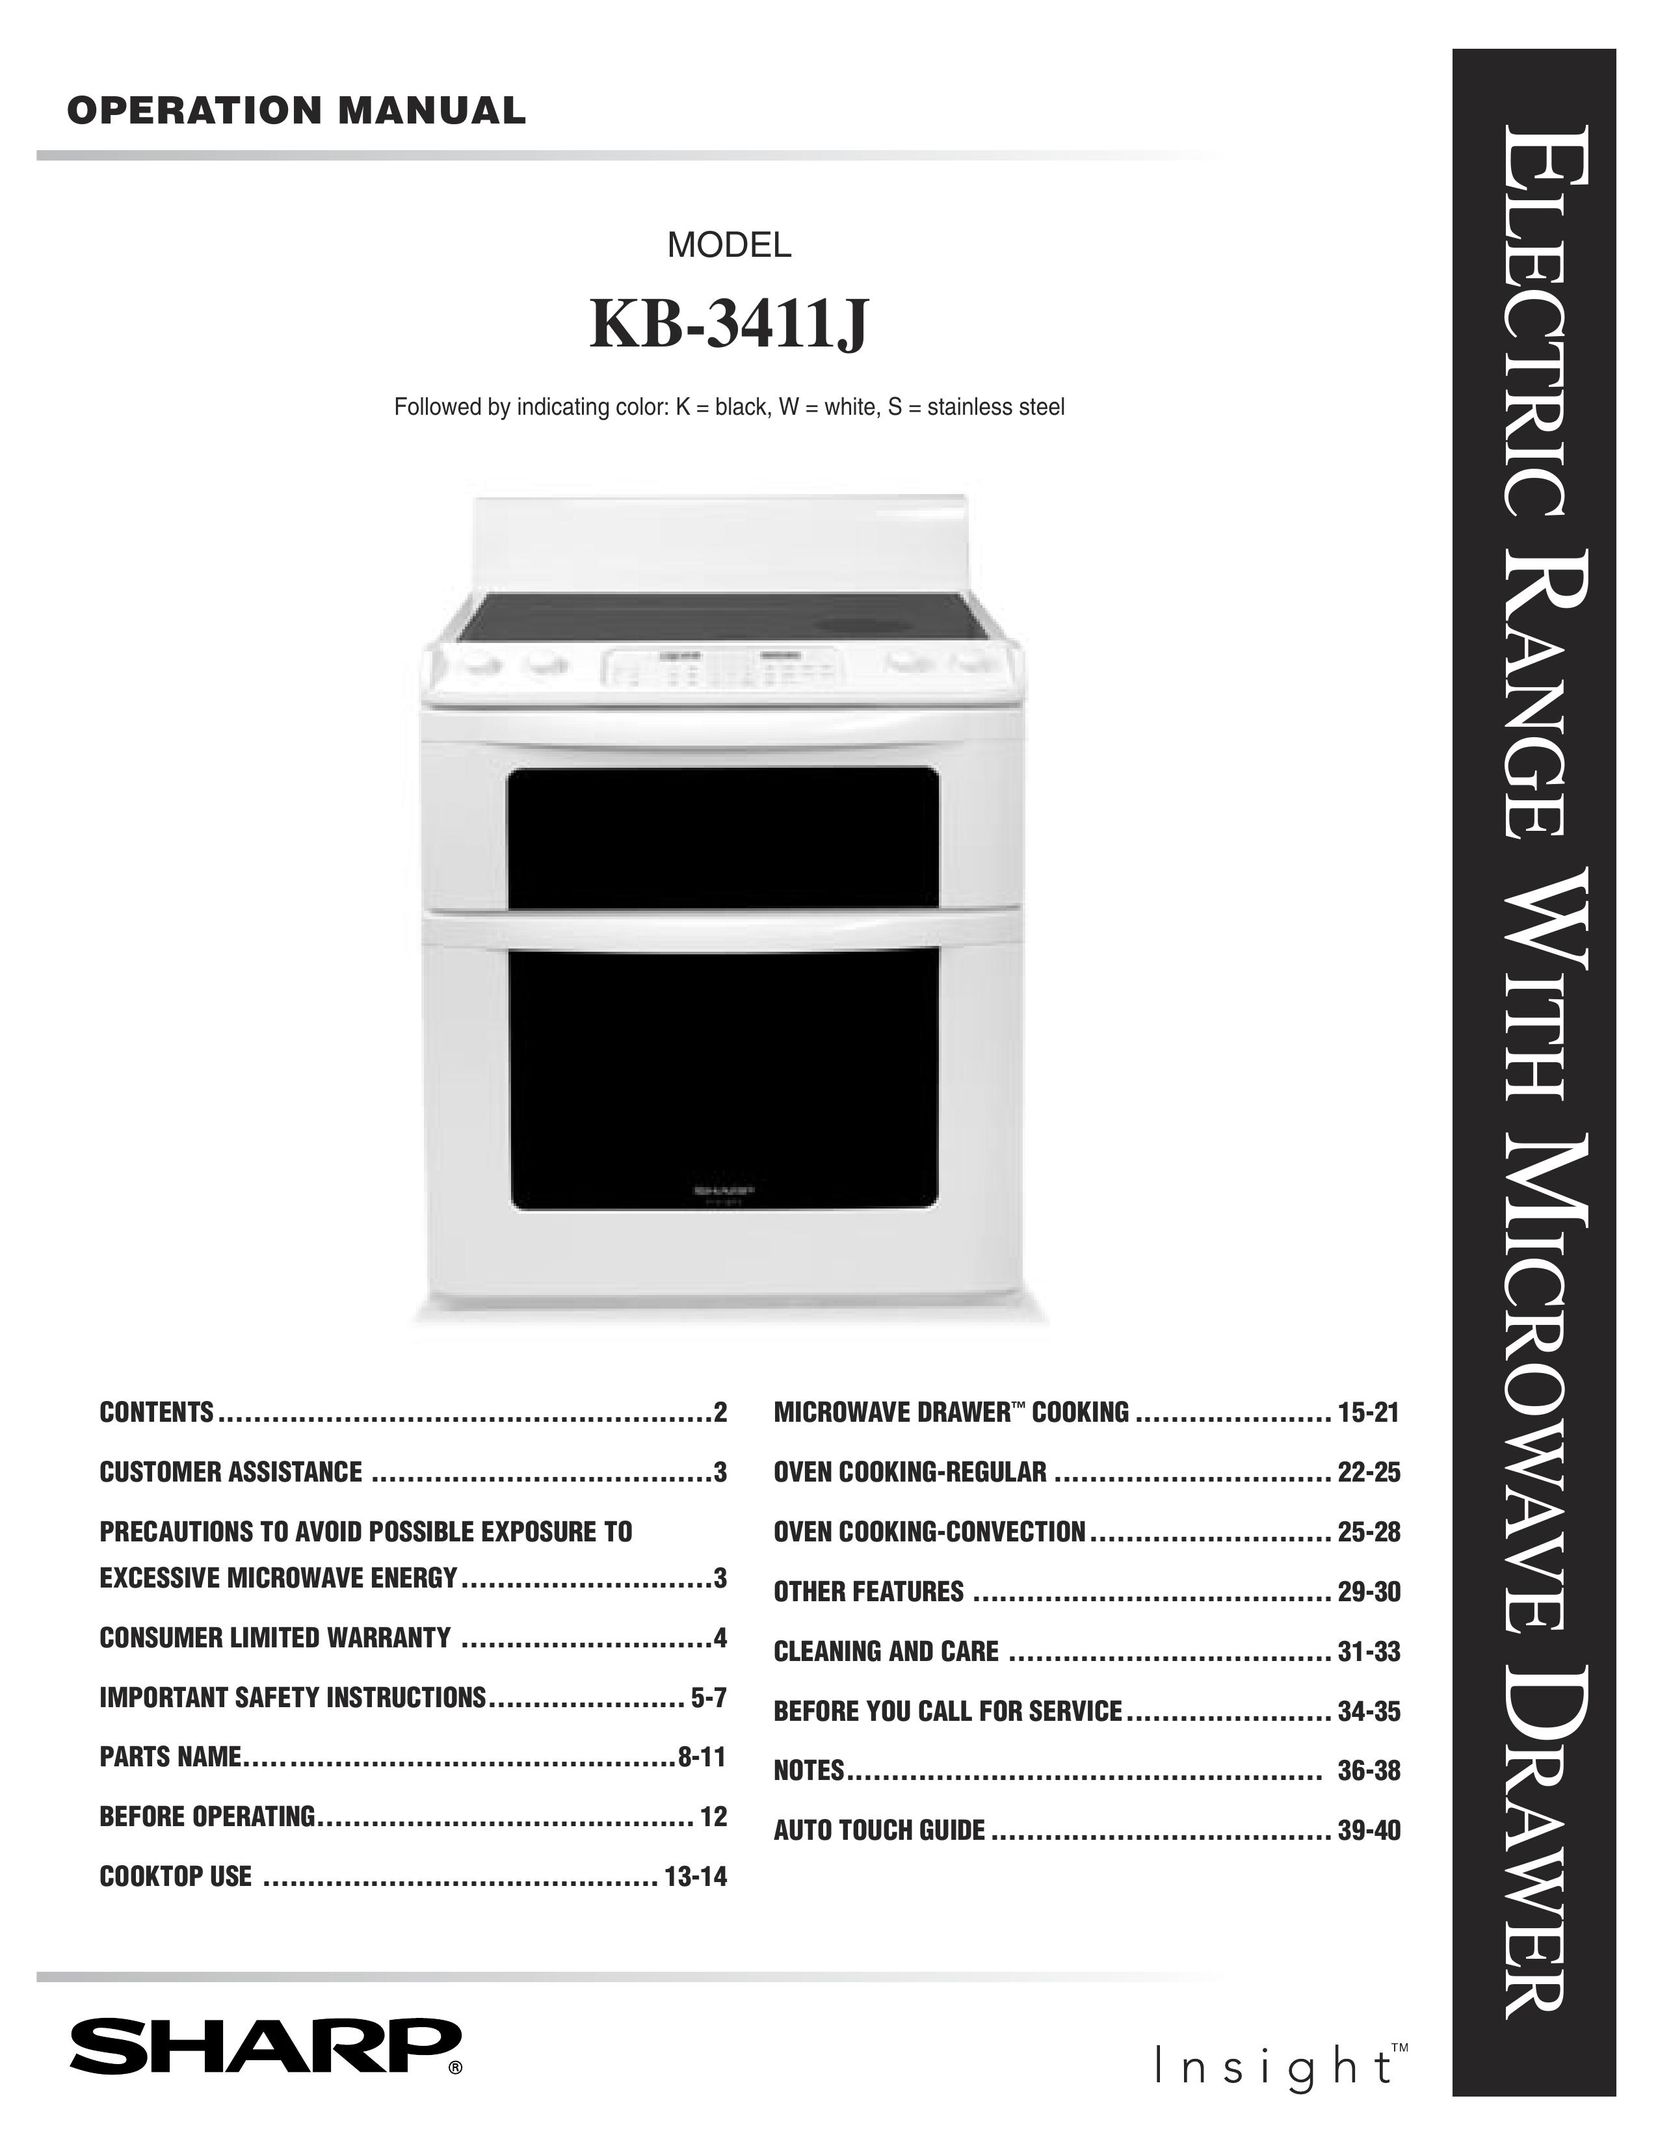 Sharp KB-3411J Range User Manual